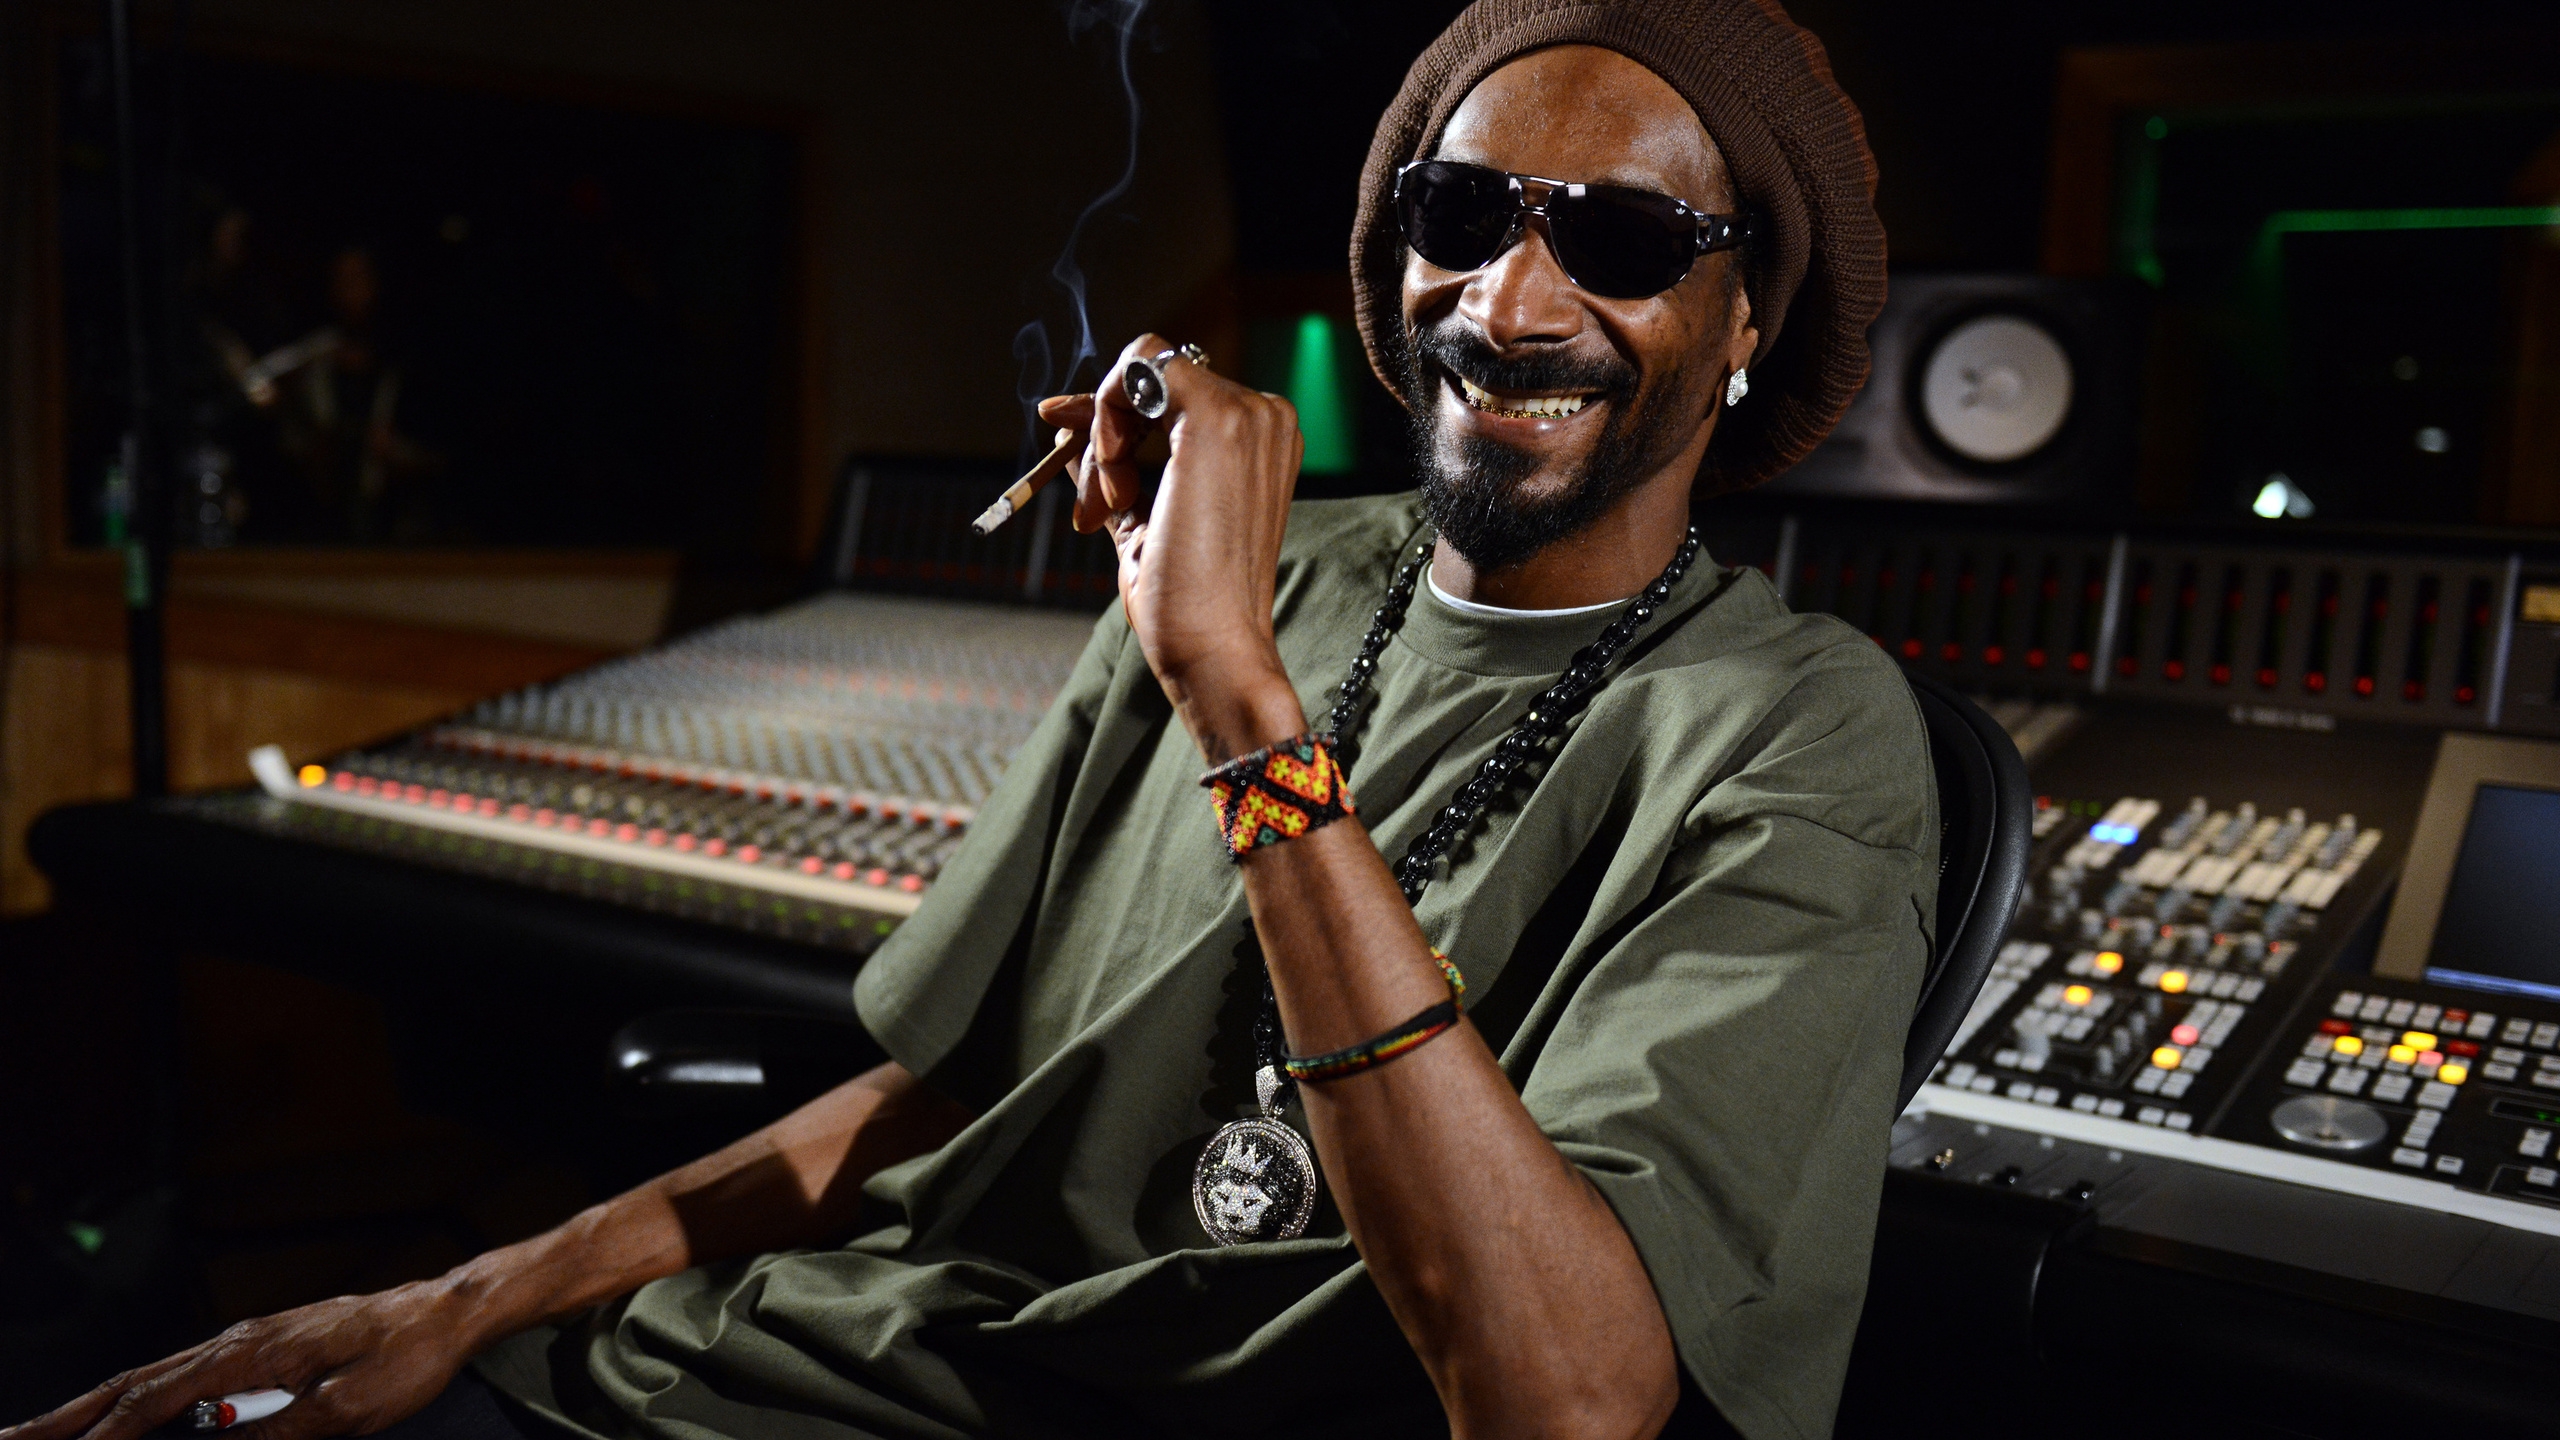 Snoop Lion for 2560x1440 HDTV resolution